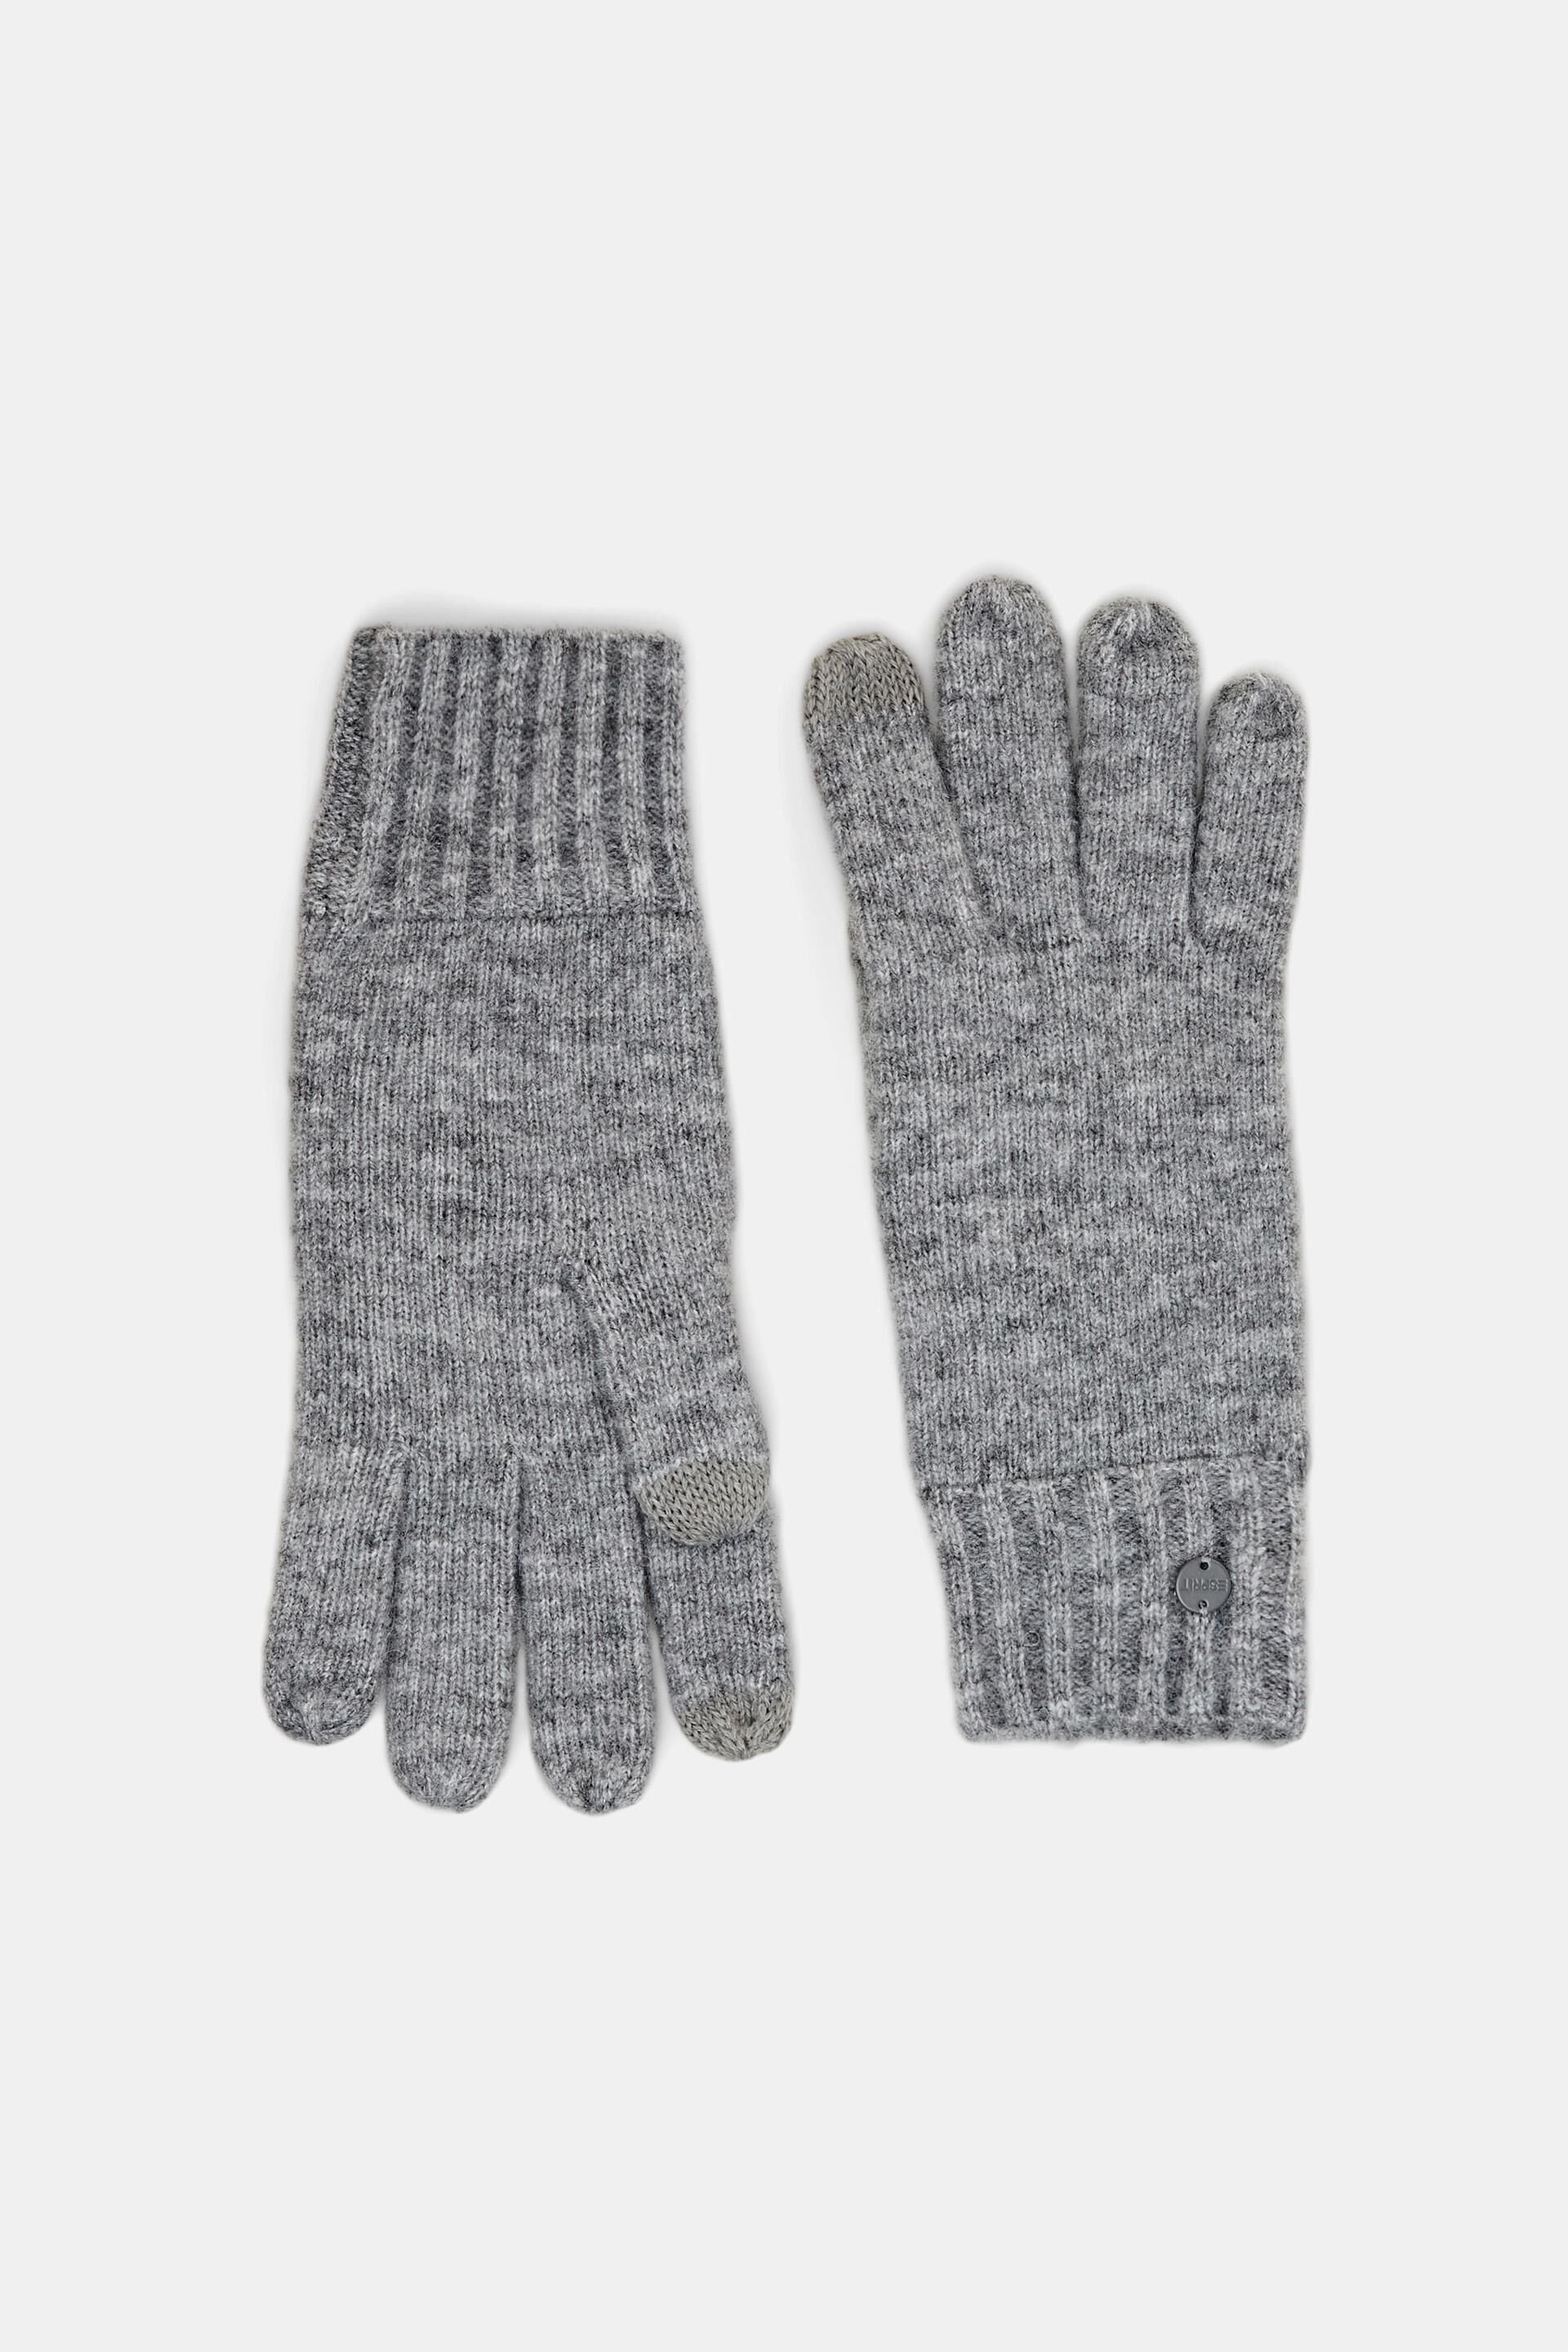 Esprit Online Store Gloves non-leather